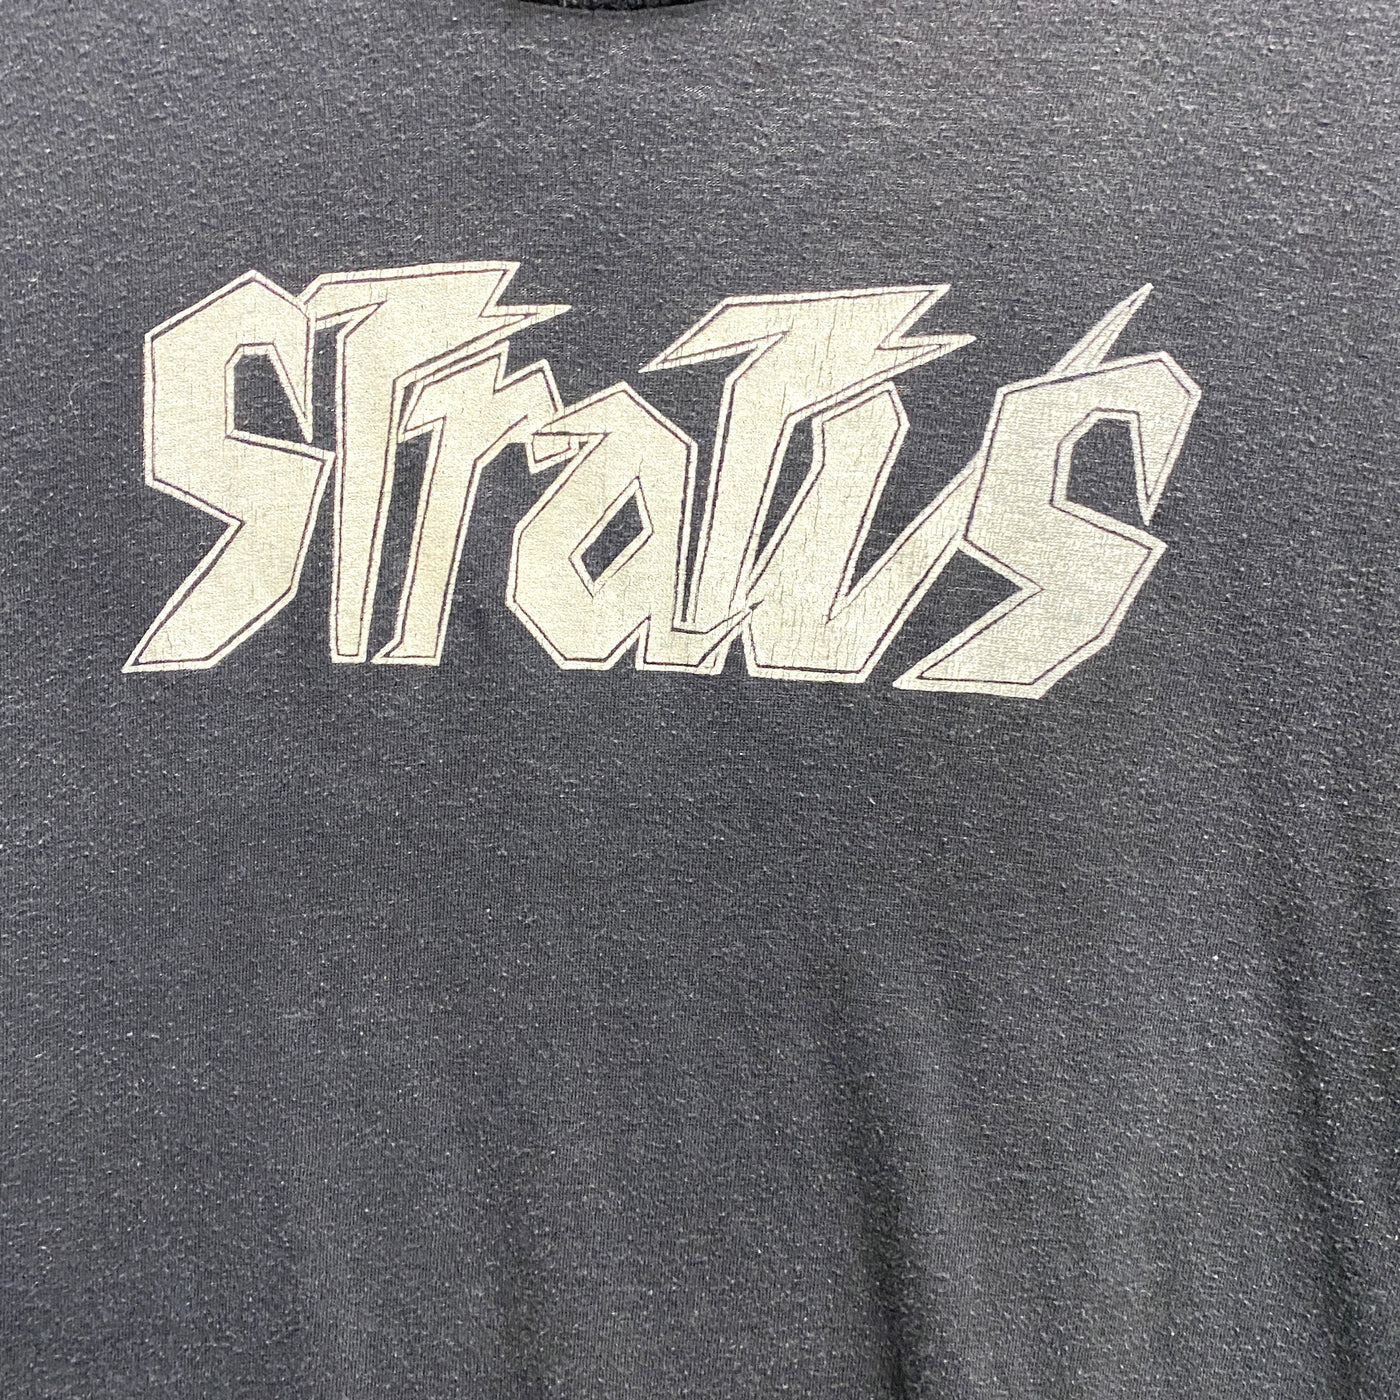 80's Stratus Band Black Music T-shirt sz L